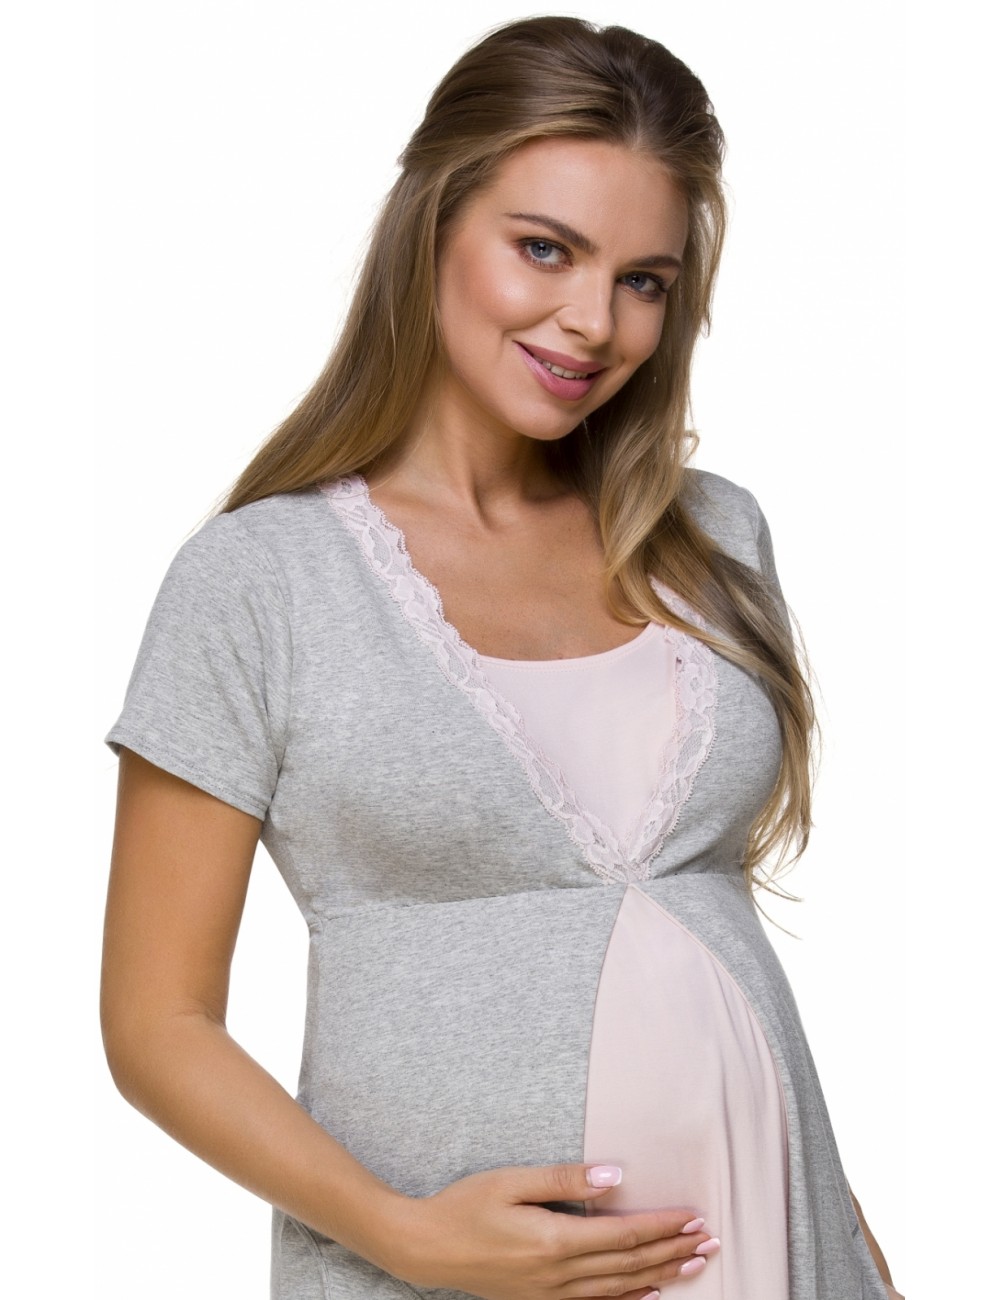 Breastfeeding nightgown - Women's maternity nightie - Maternity fashion 3125